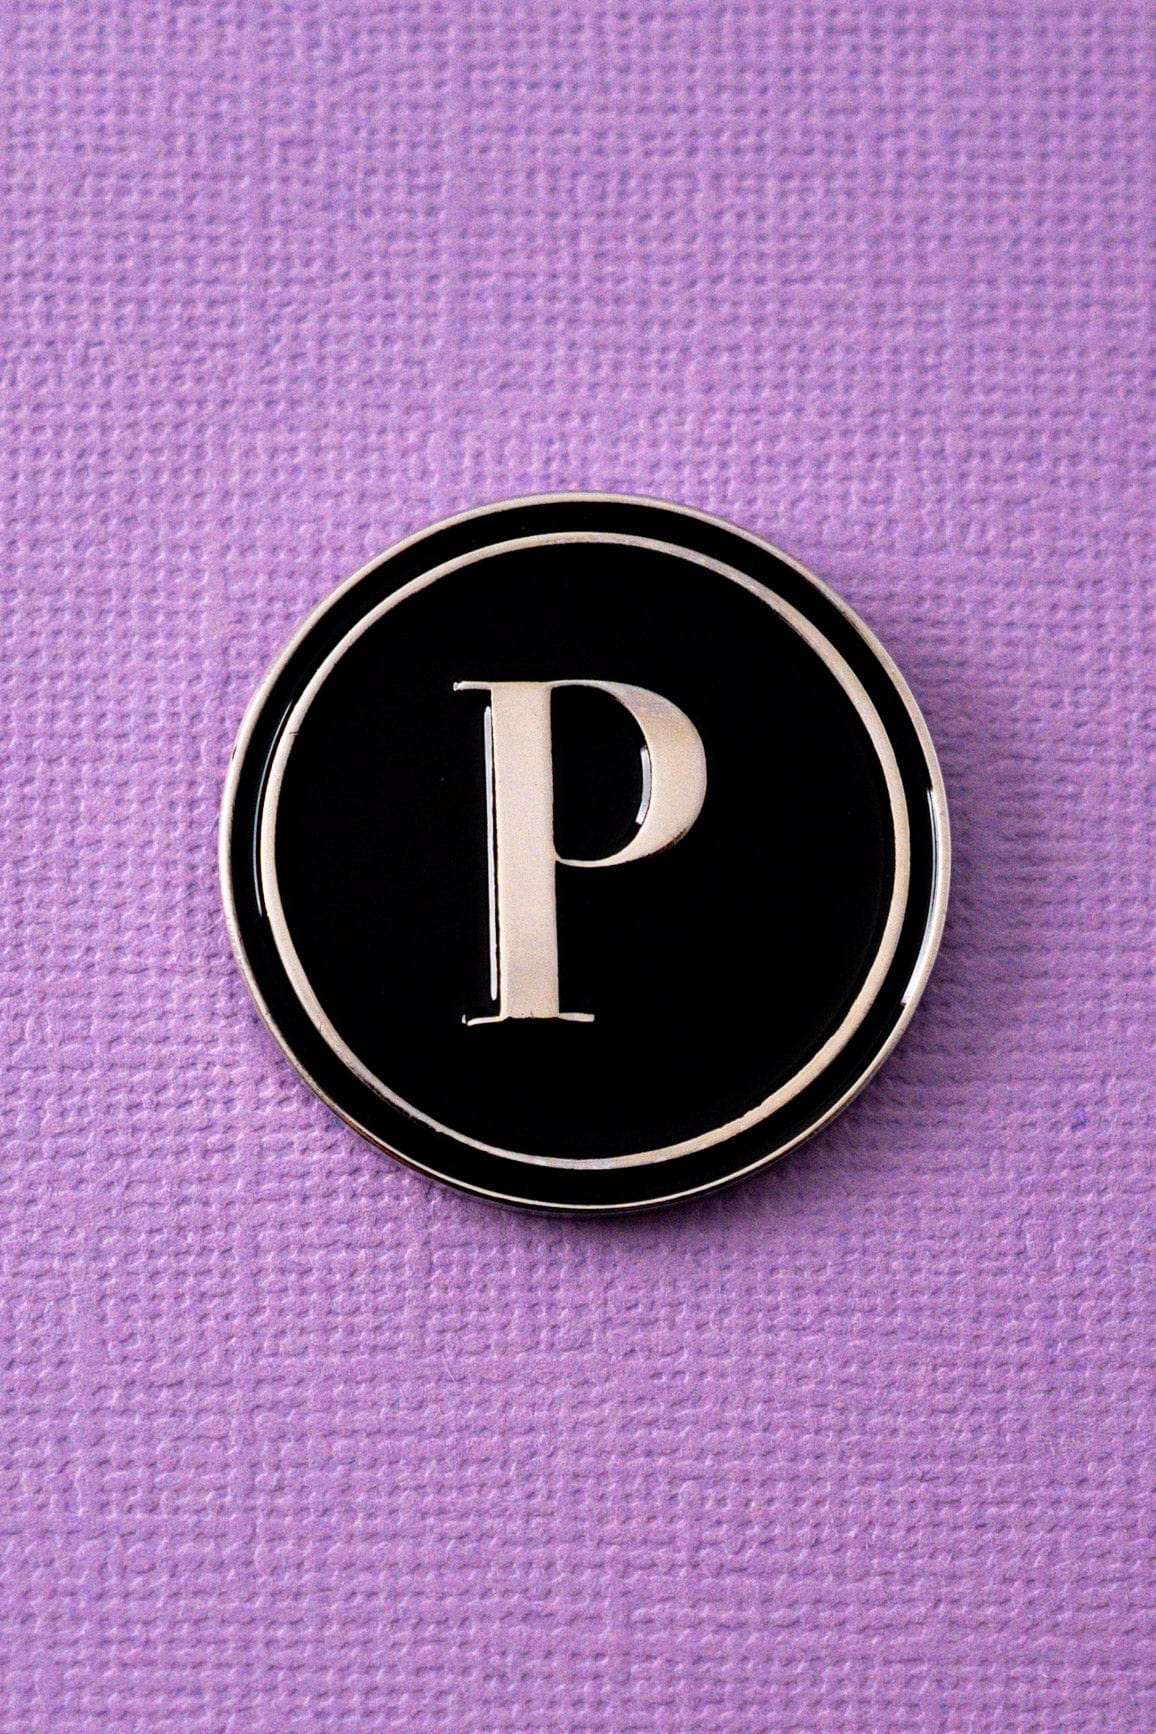 P Alphabet Enamel Pin ENAMEL PIN OS